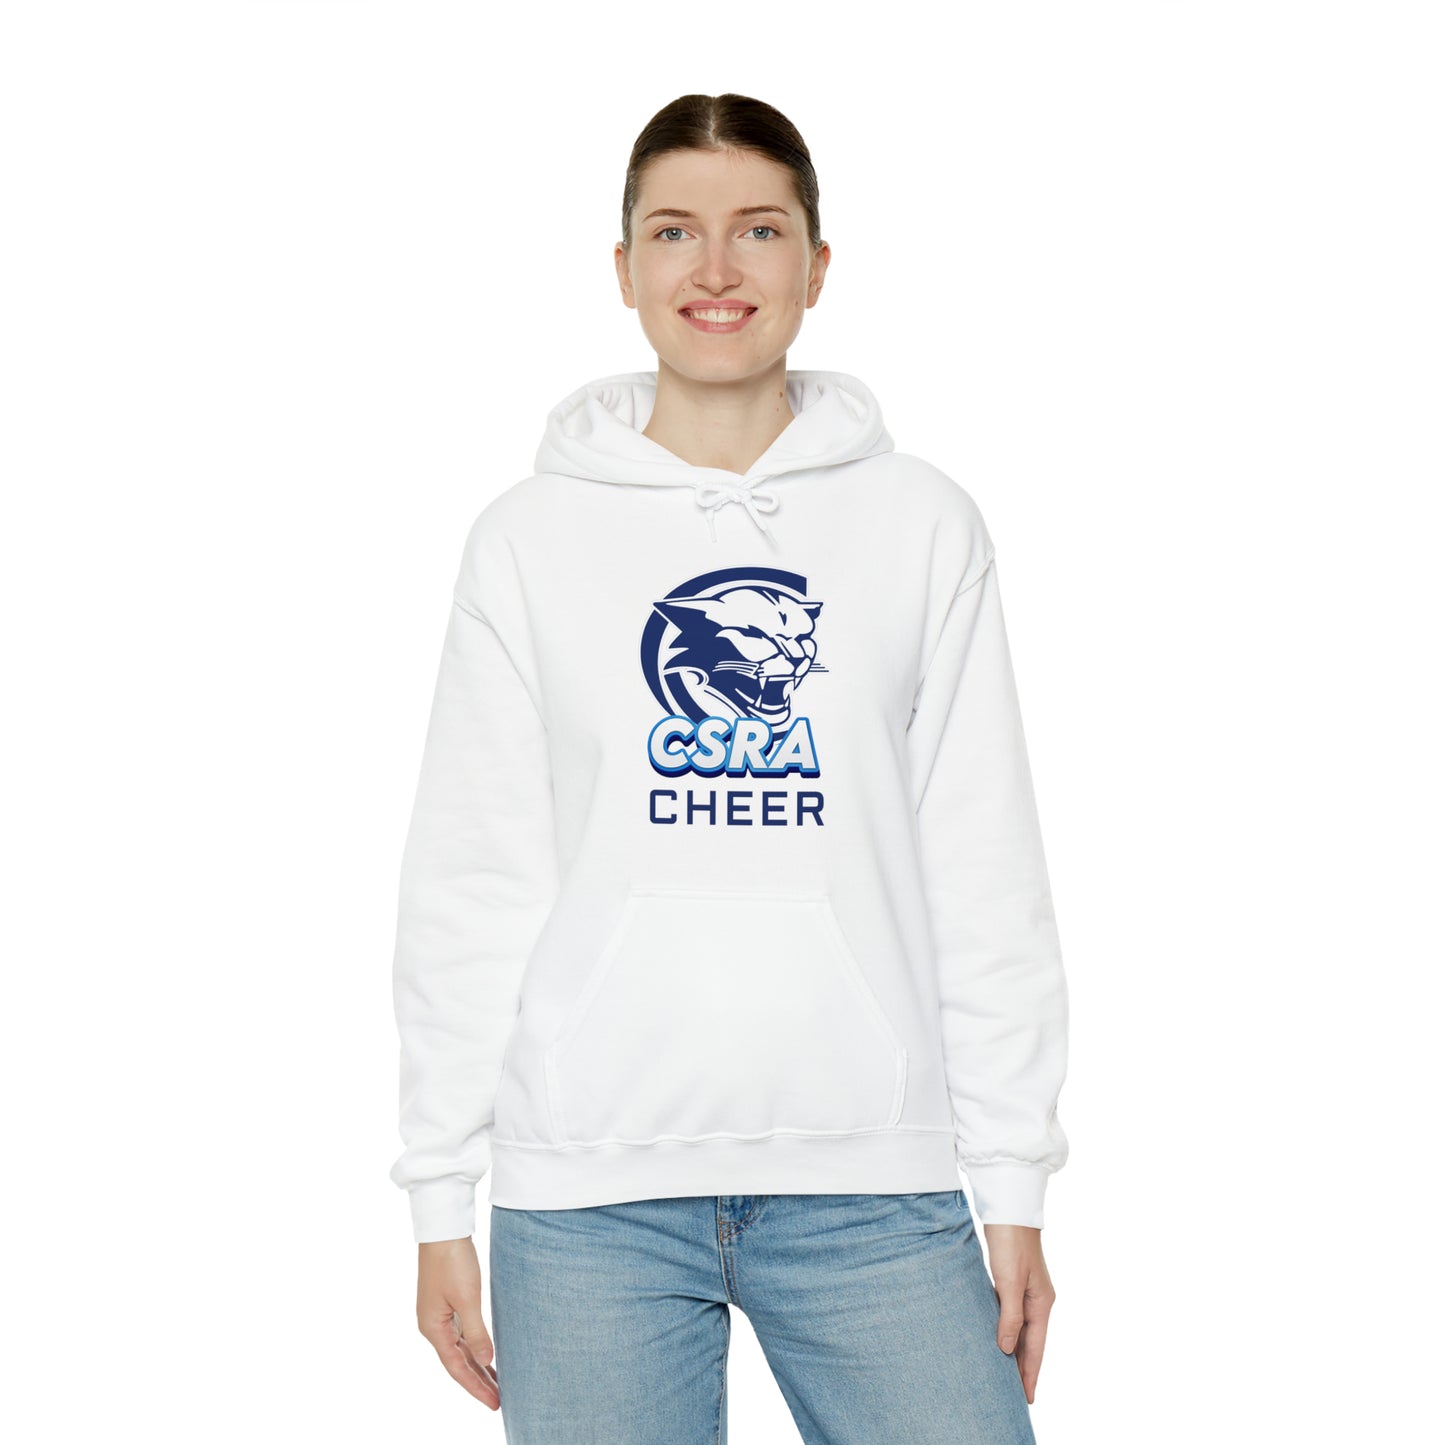 CSRA Cheer Unisex Hooded Sweatshirt